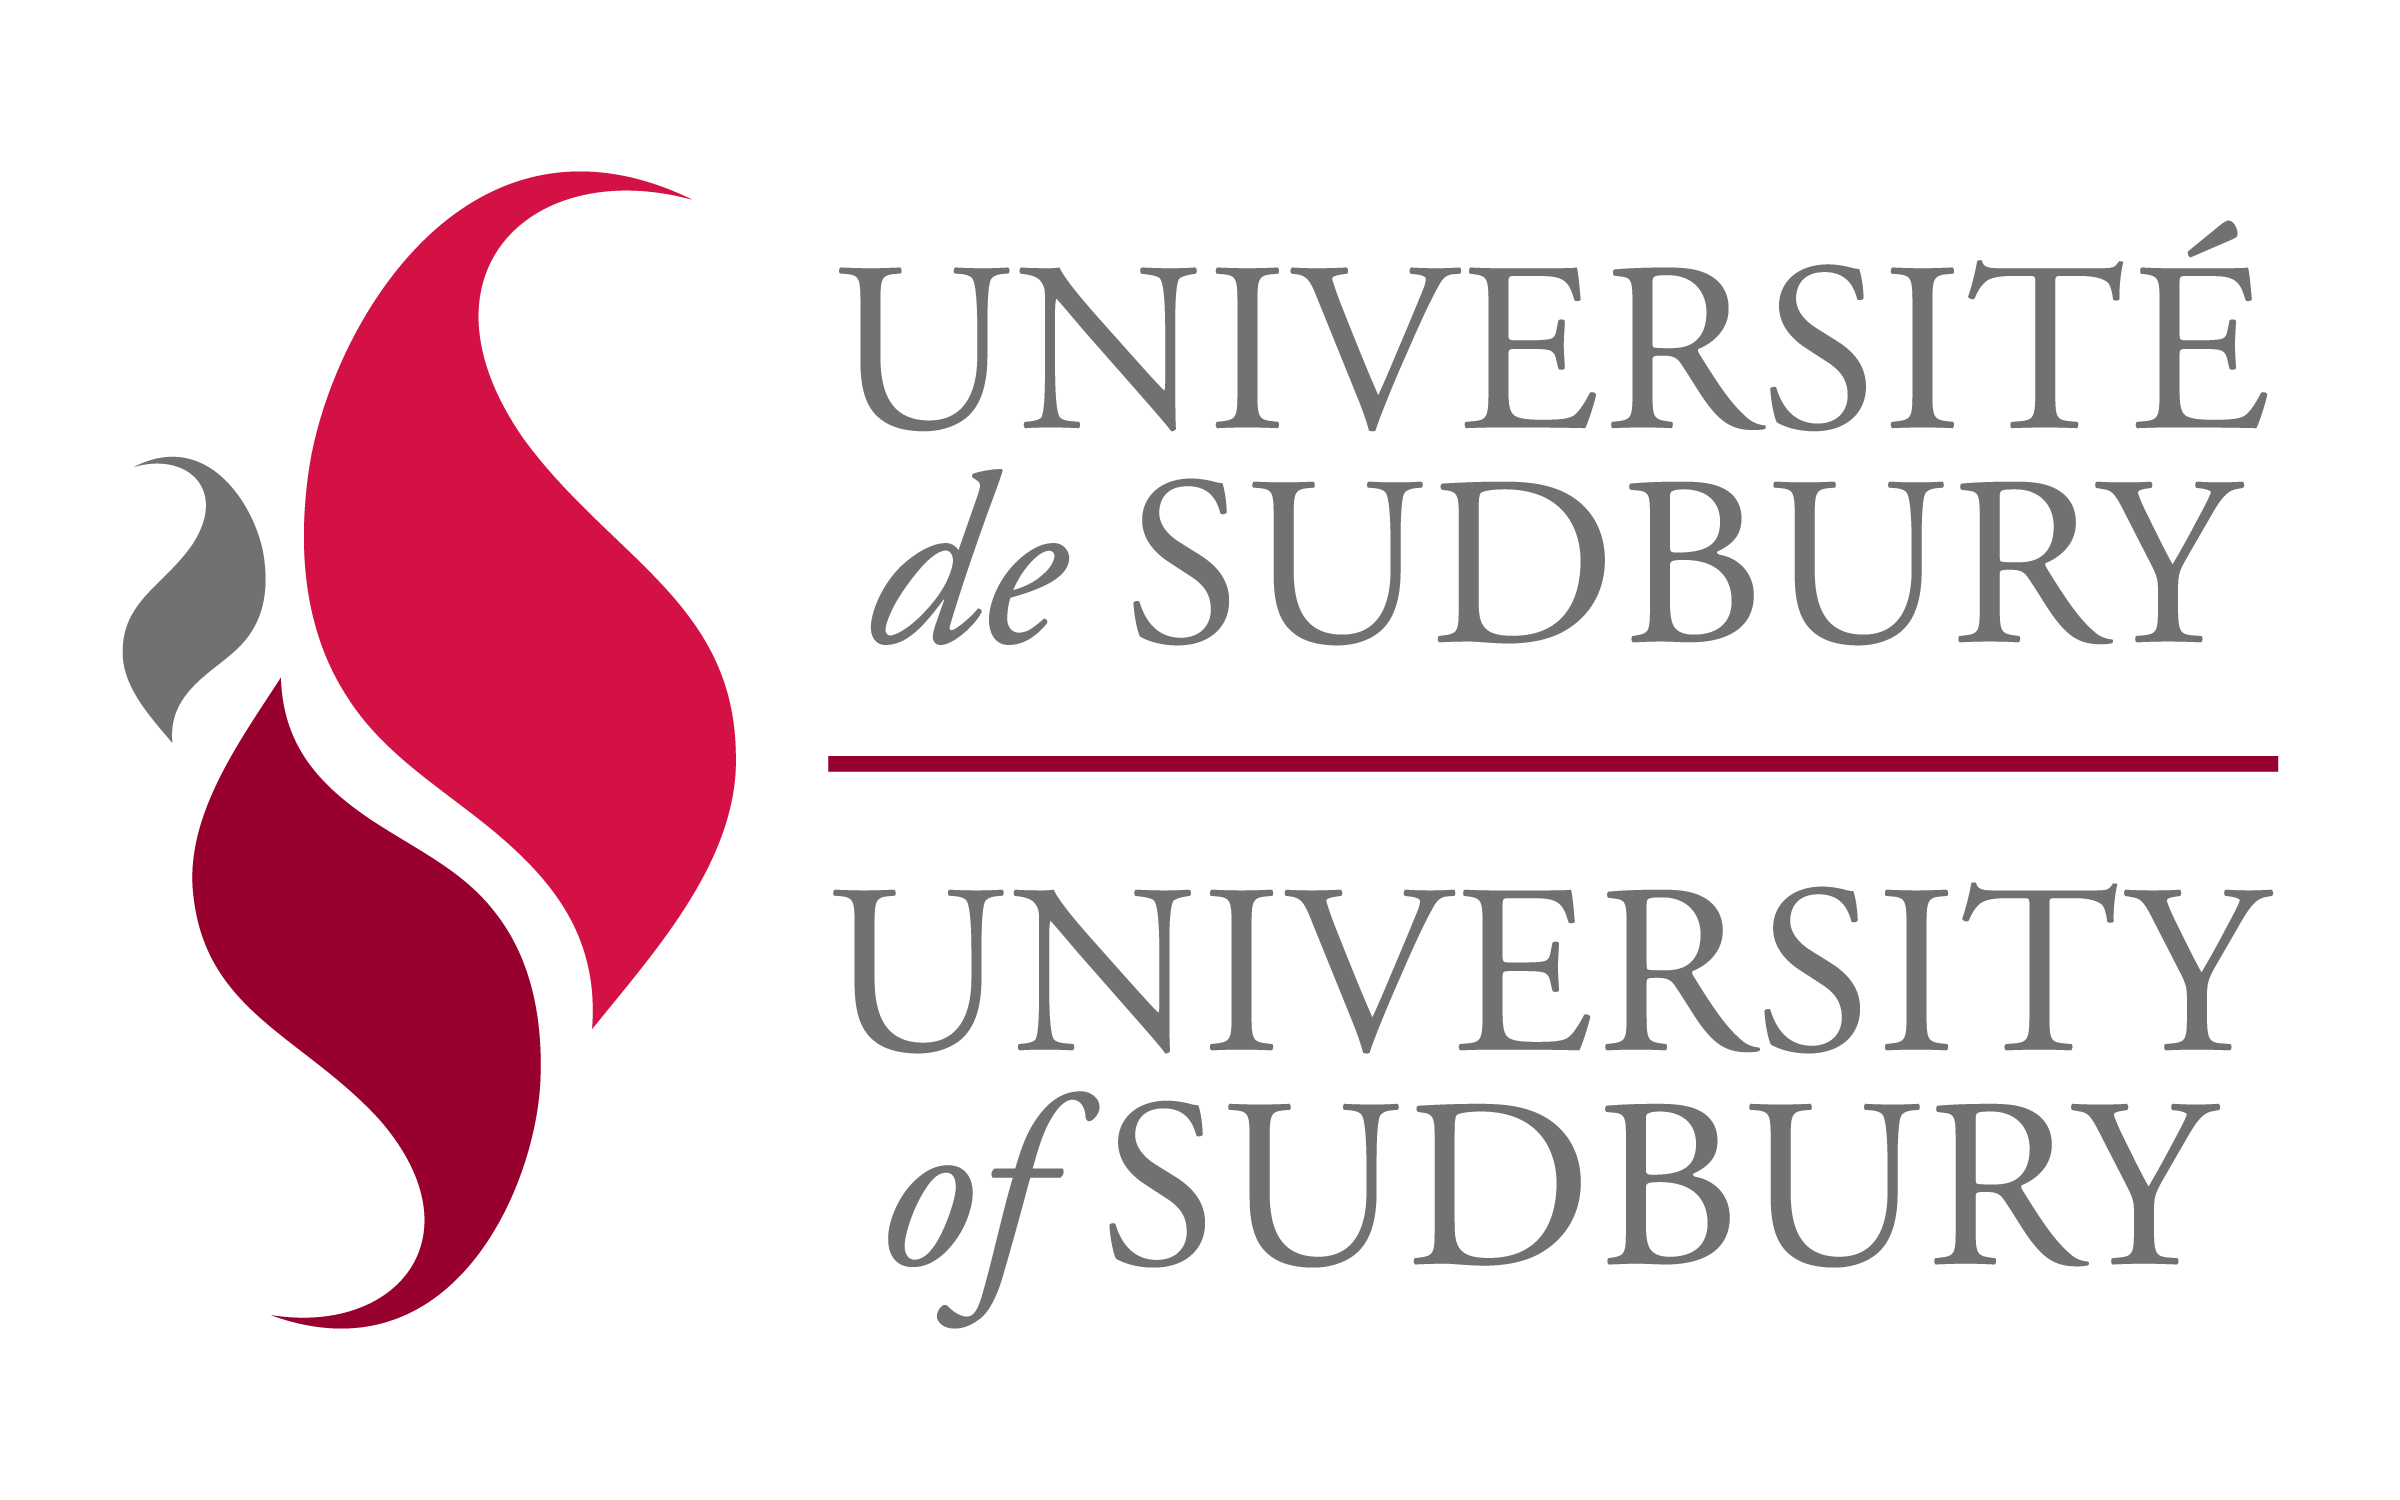 Sudbury university